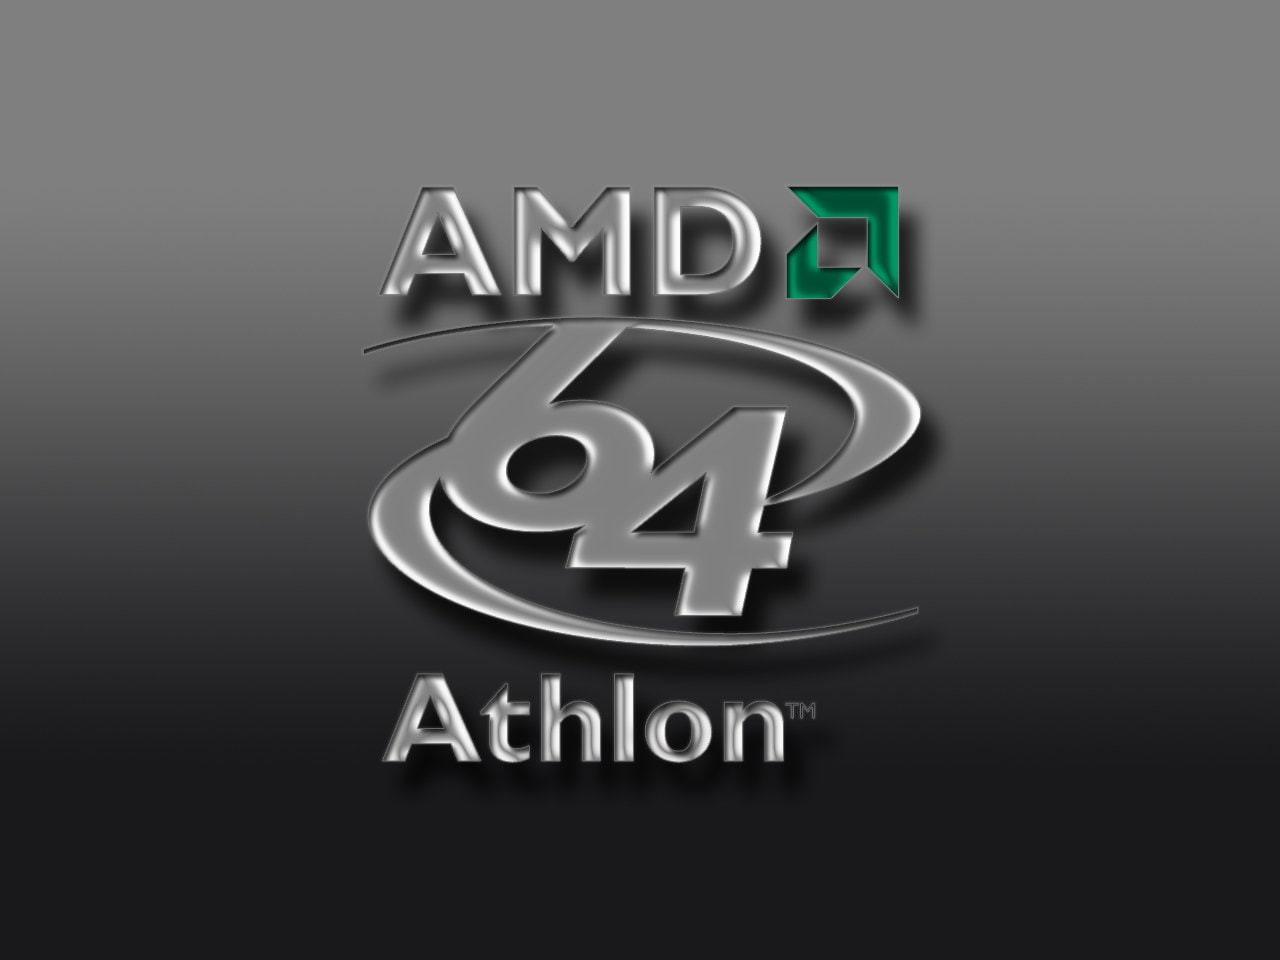 AMD 64 Athlon logo, Technology